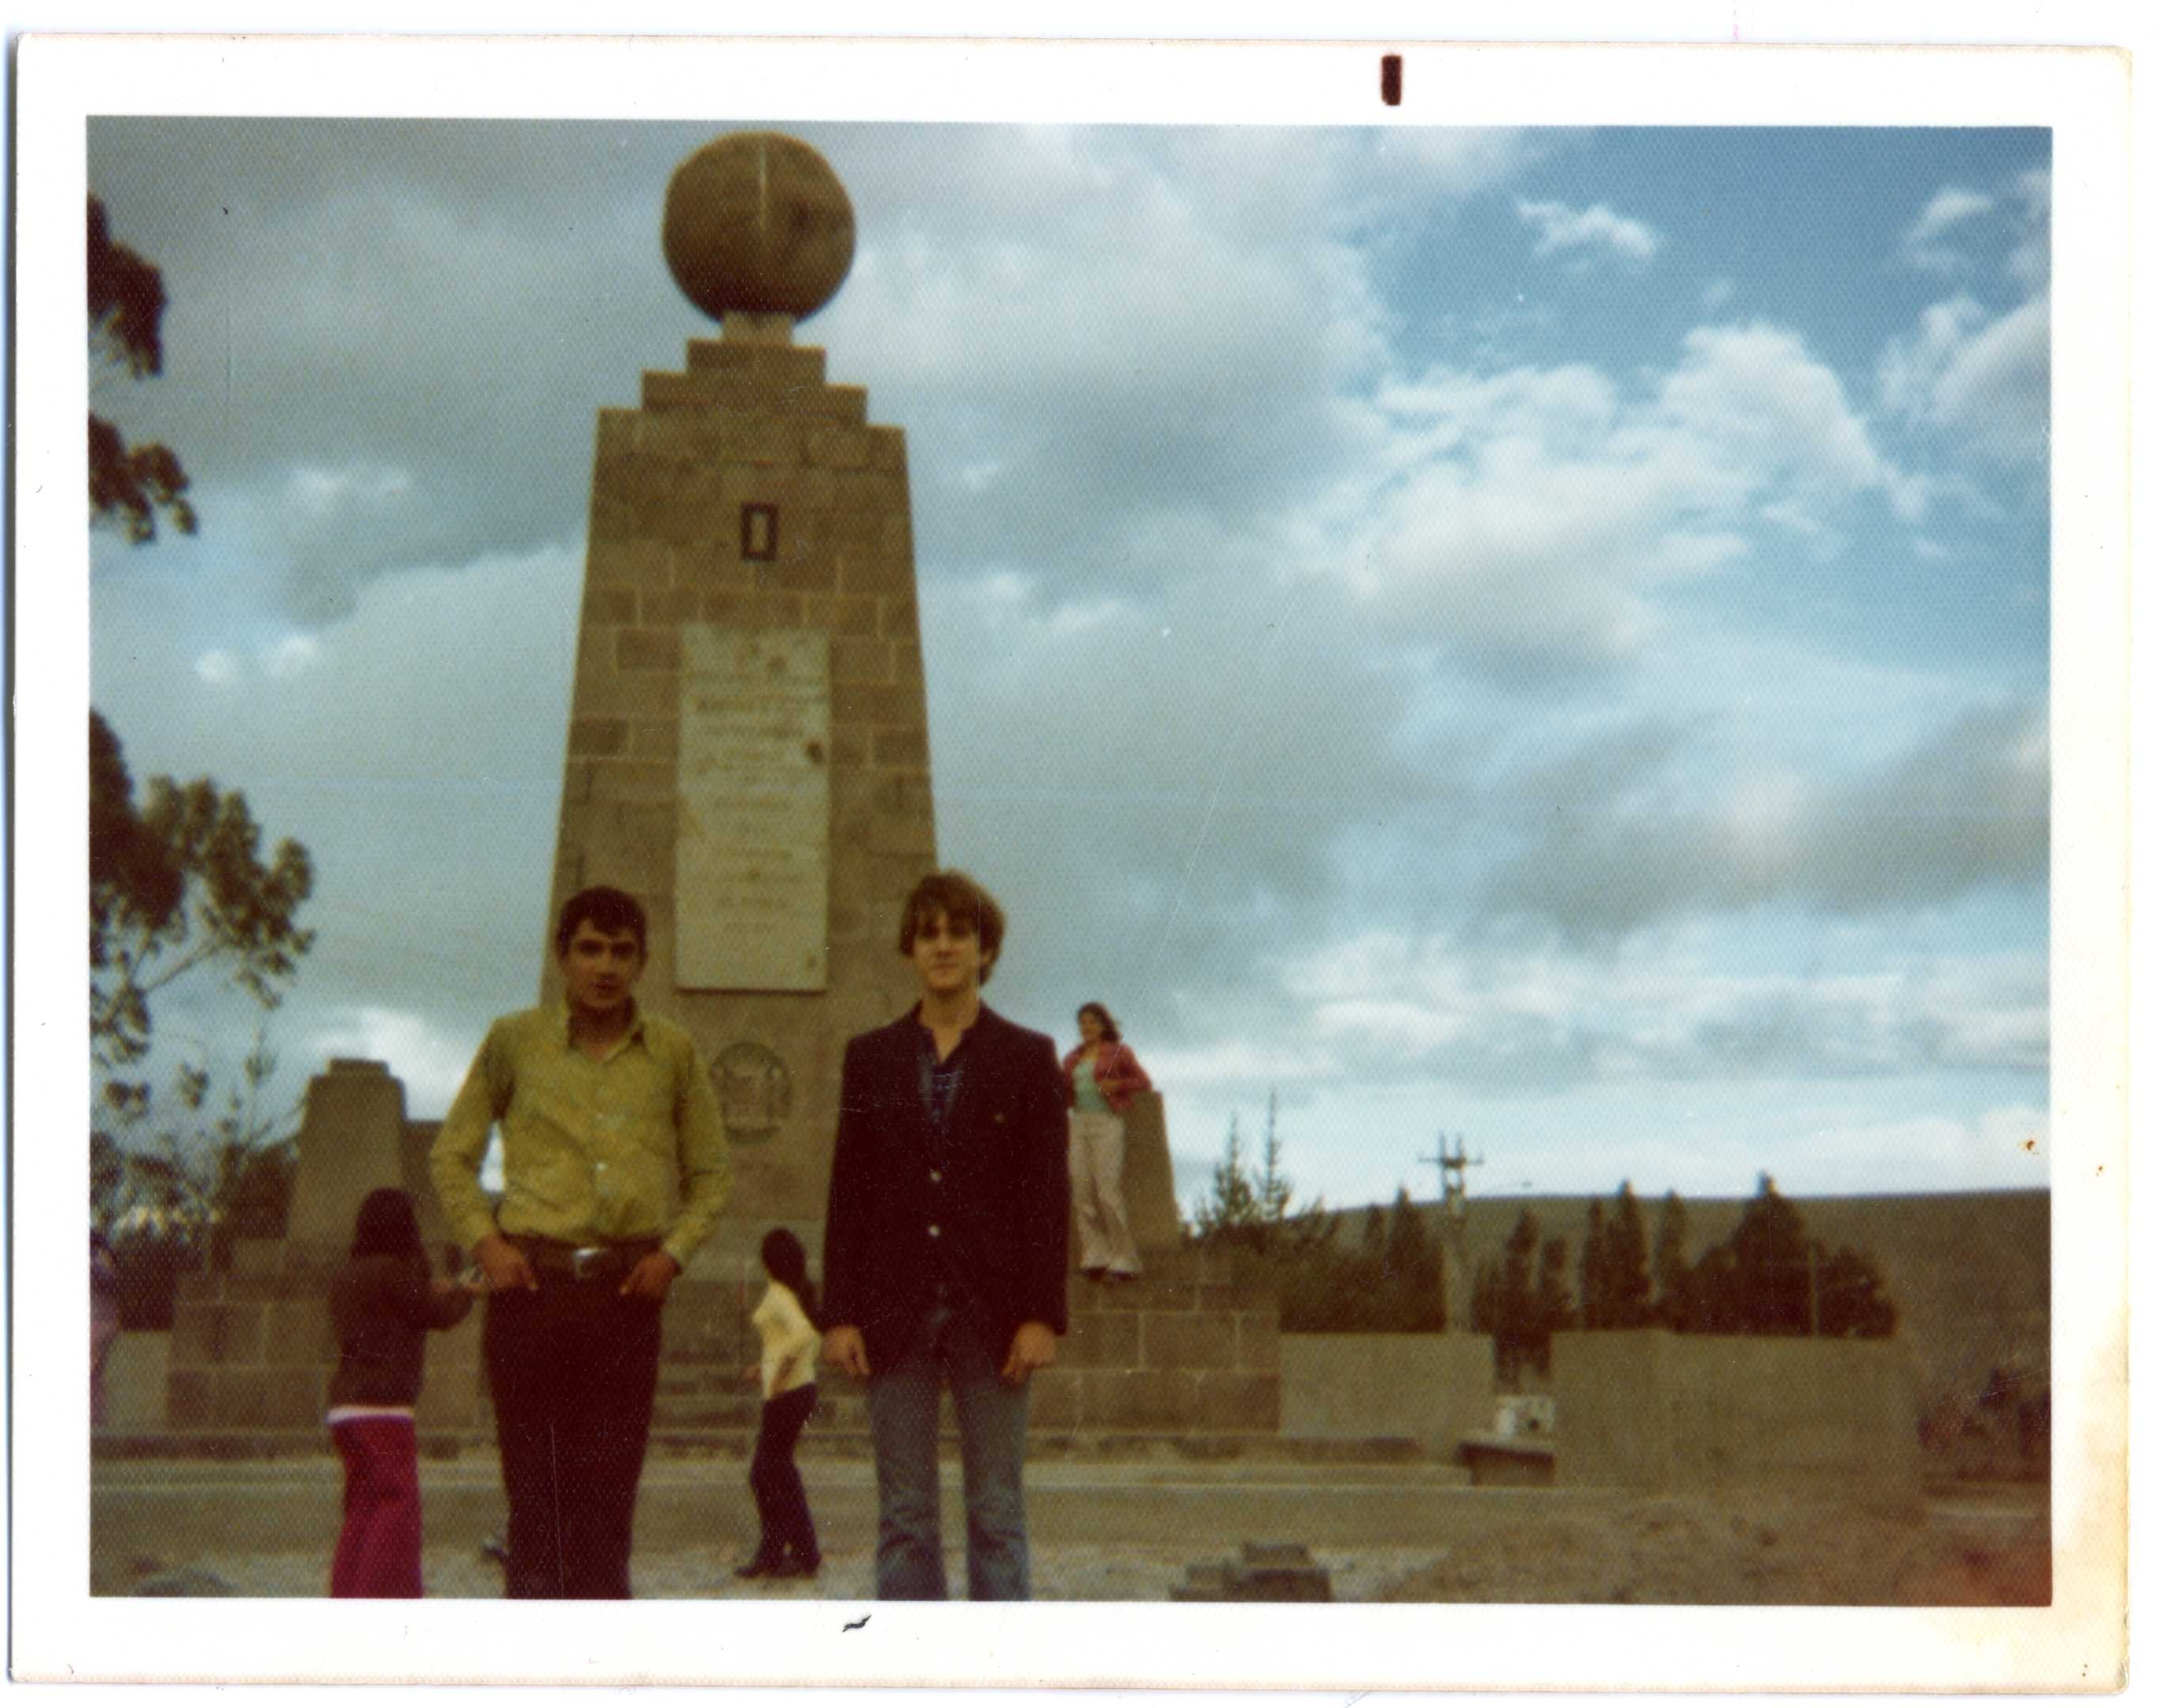 photograph of Fabian Sancho and Robb Scott at Mitad del Mundo near Quito, Ecuador, in August, 1974